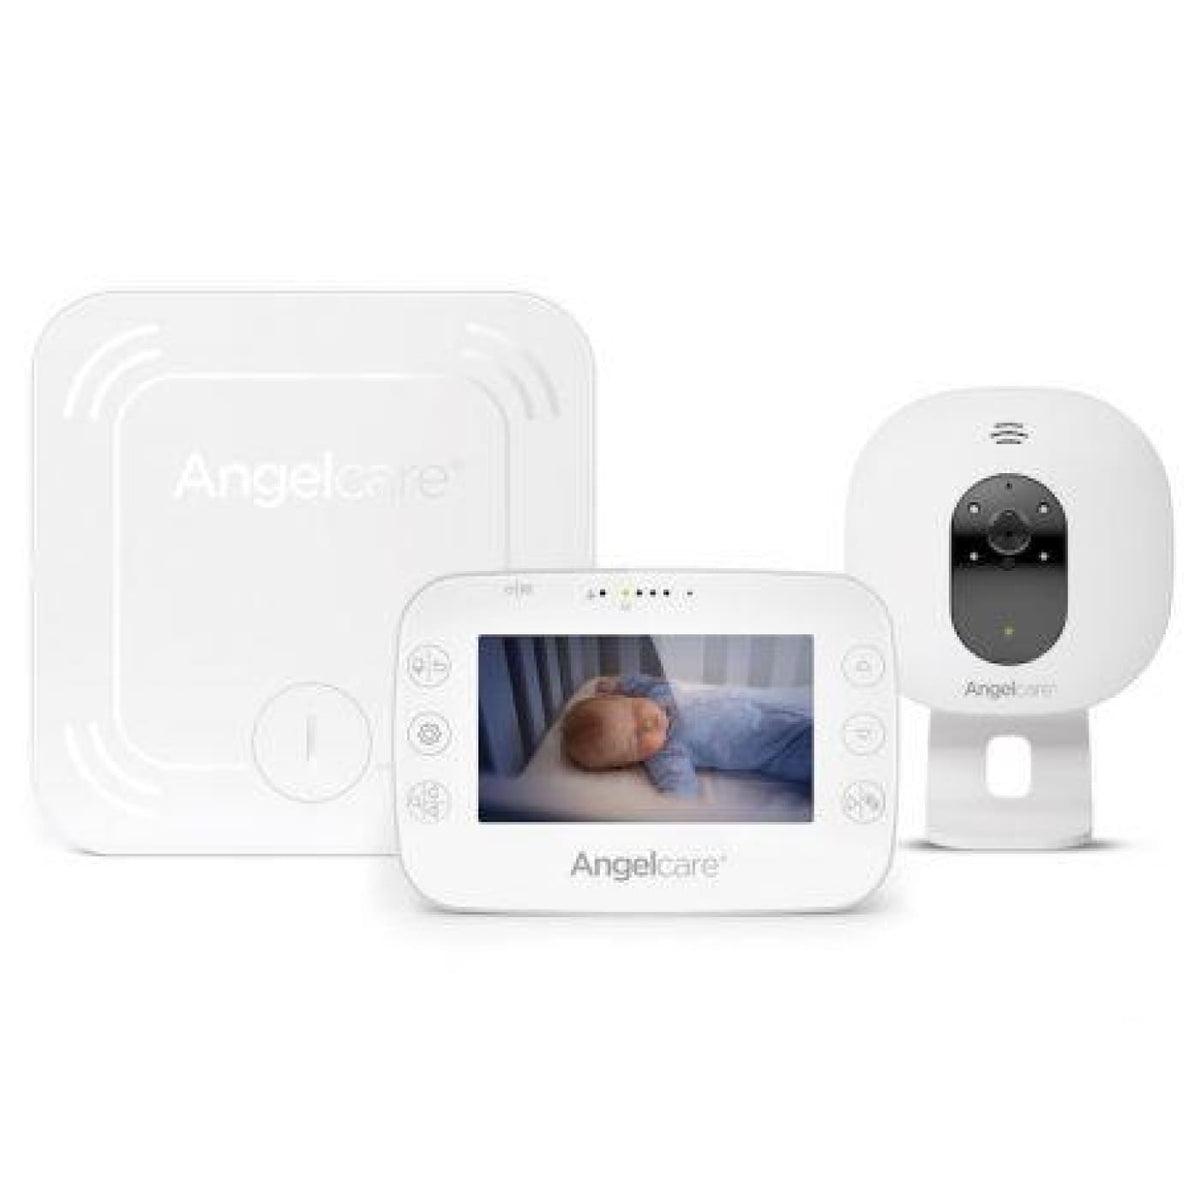 Angelcare Movement Video &amp; Sound Monitor 4.3inch Screen SensAsure Sensor Pad - HEALTH &amp; HOME SAFETY - BABY MONITORS